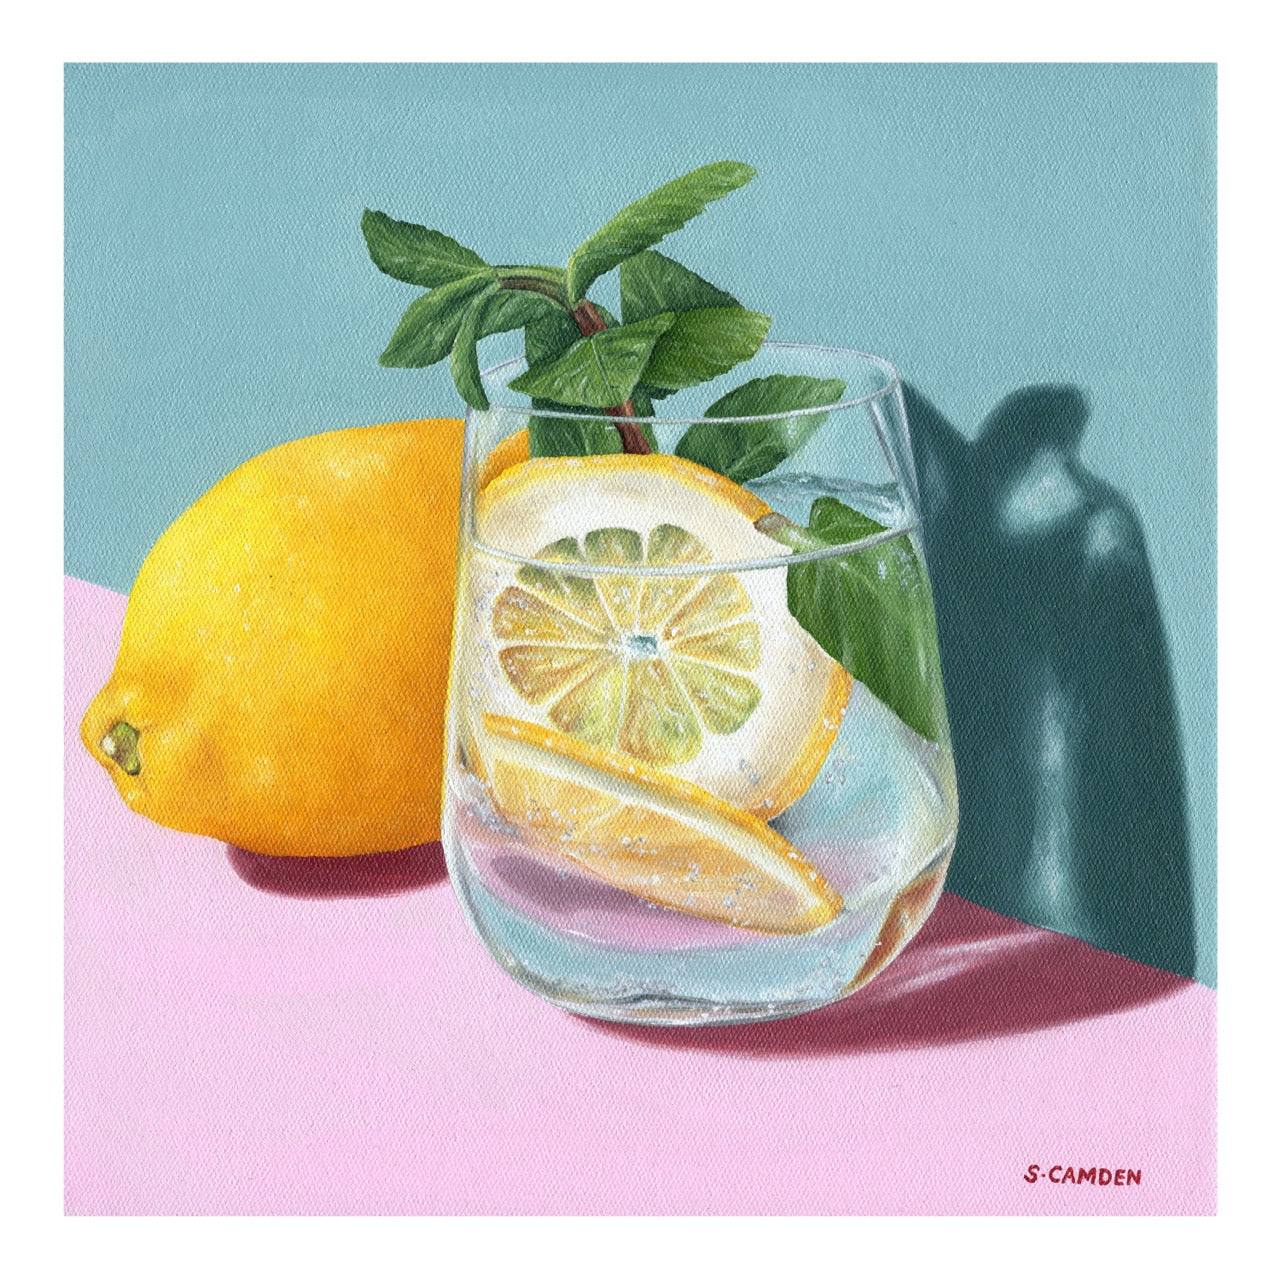 Lemon Cocktail Limited Ed. Fine Art Print